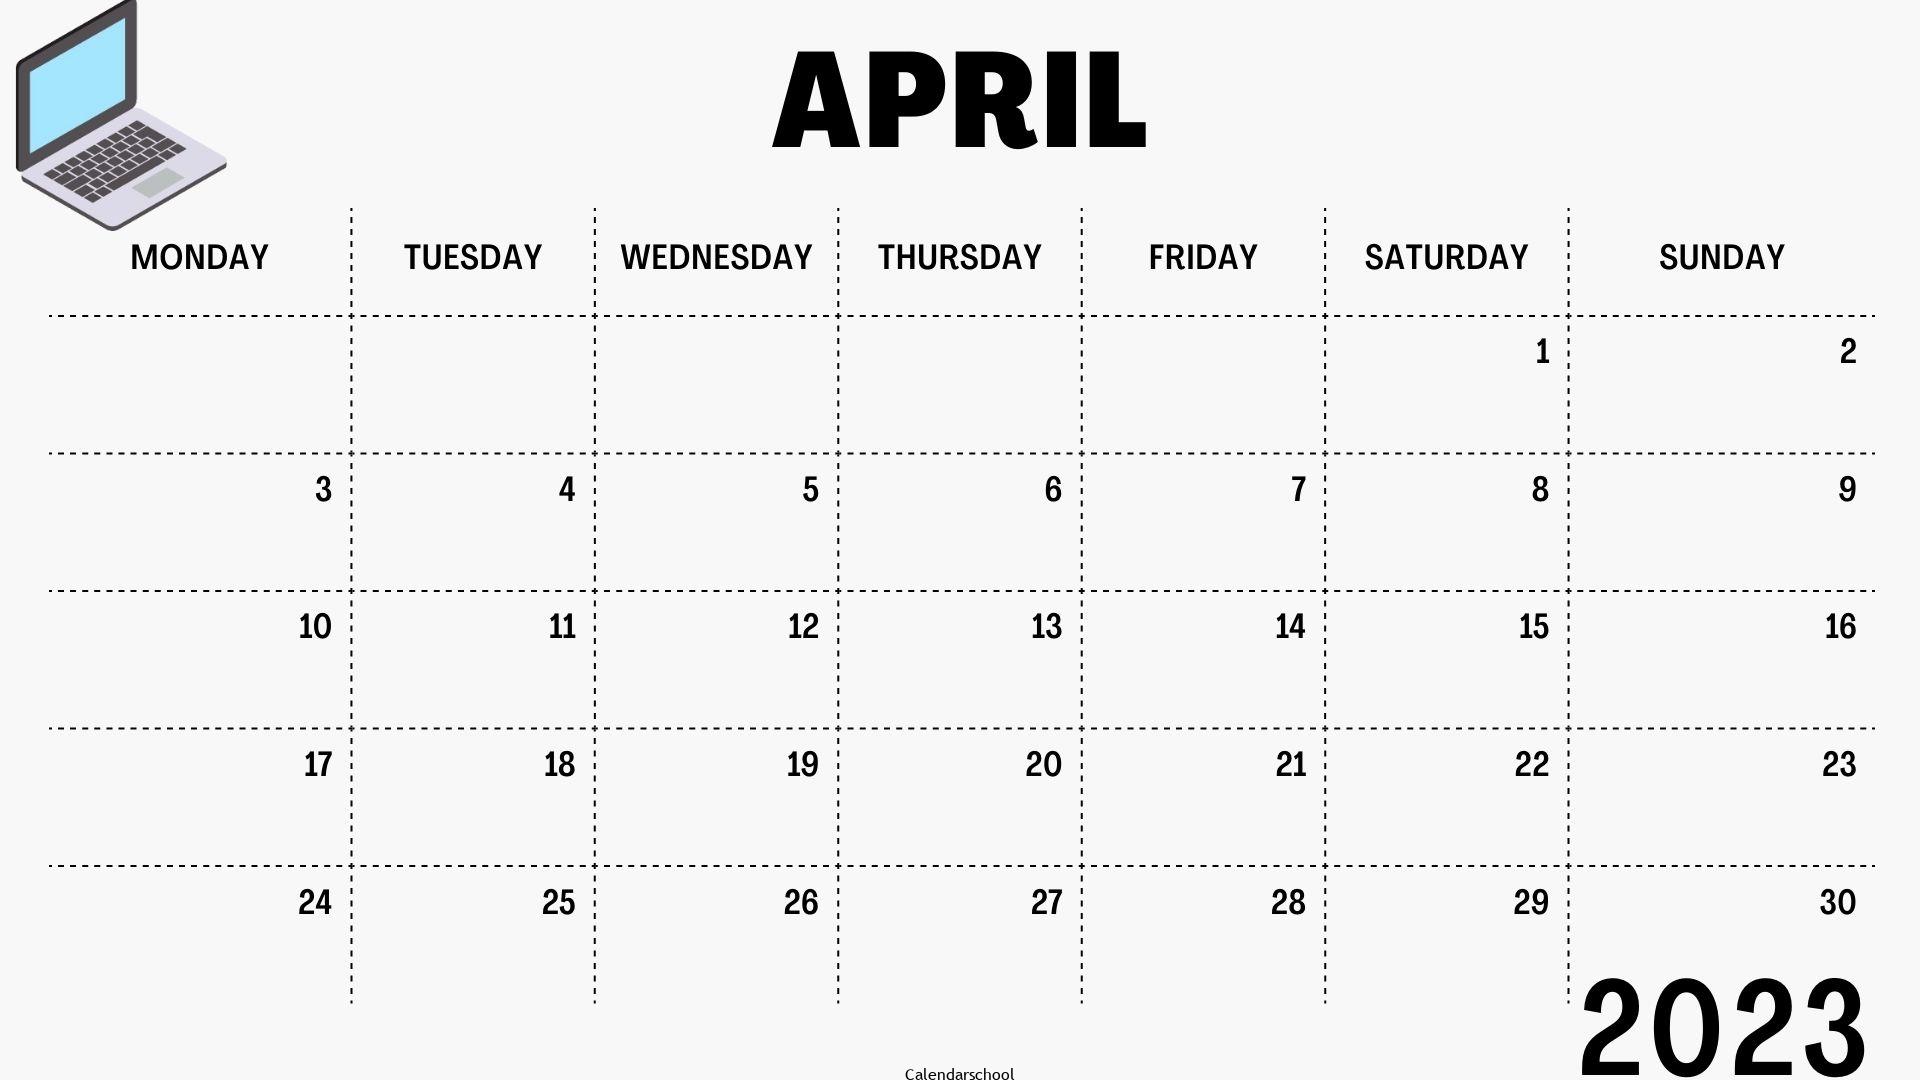 Calendar April 2022 to March 2023